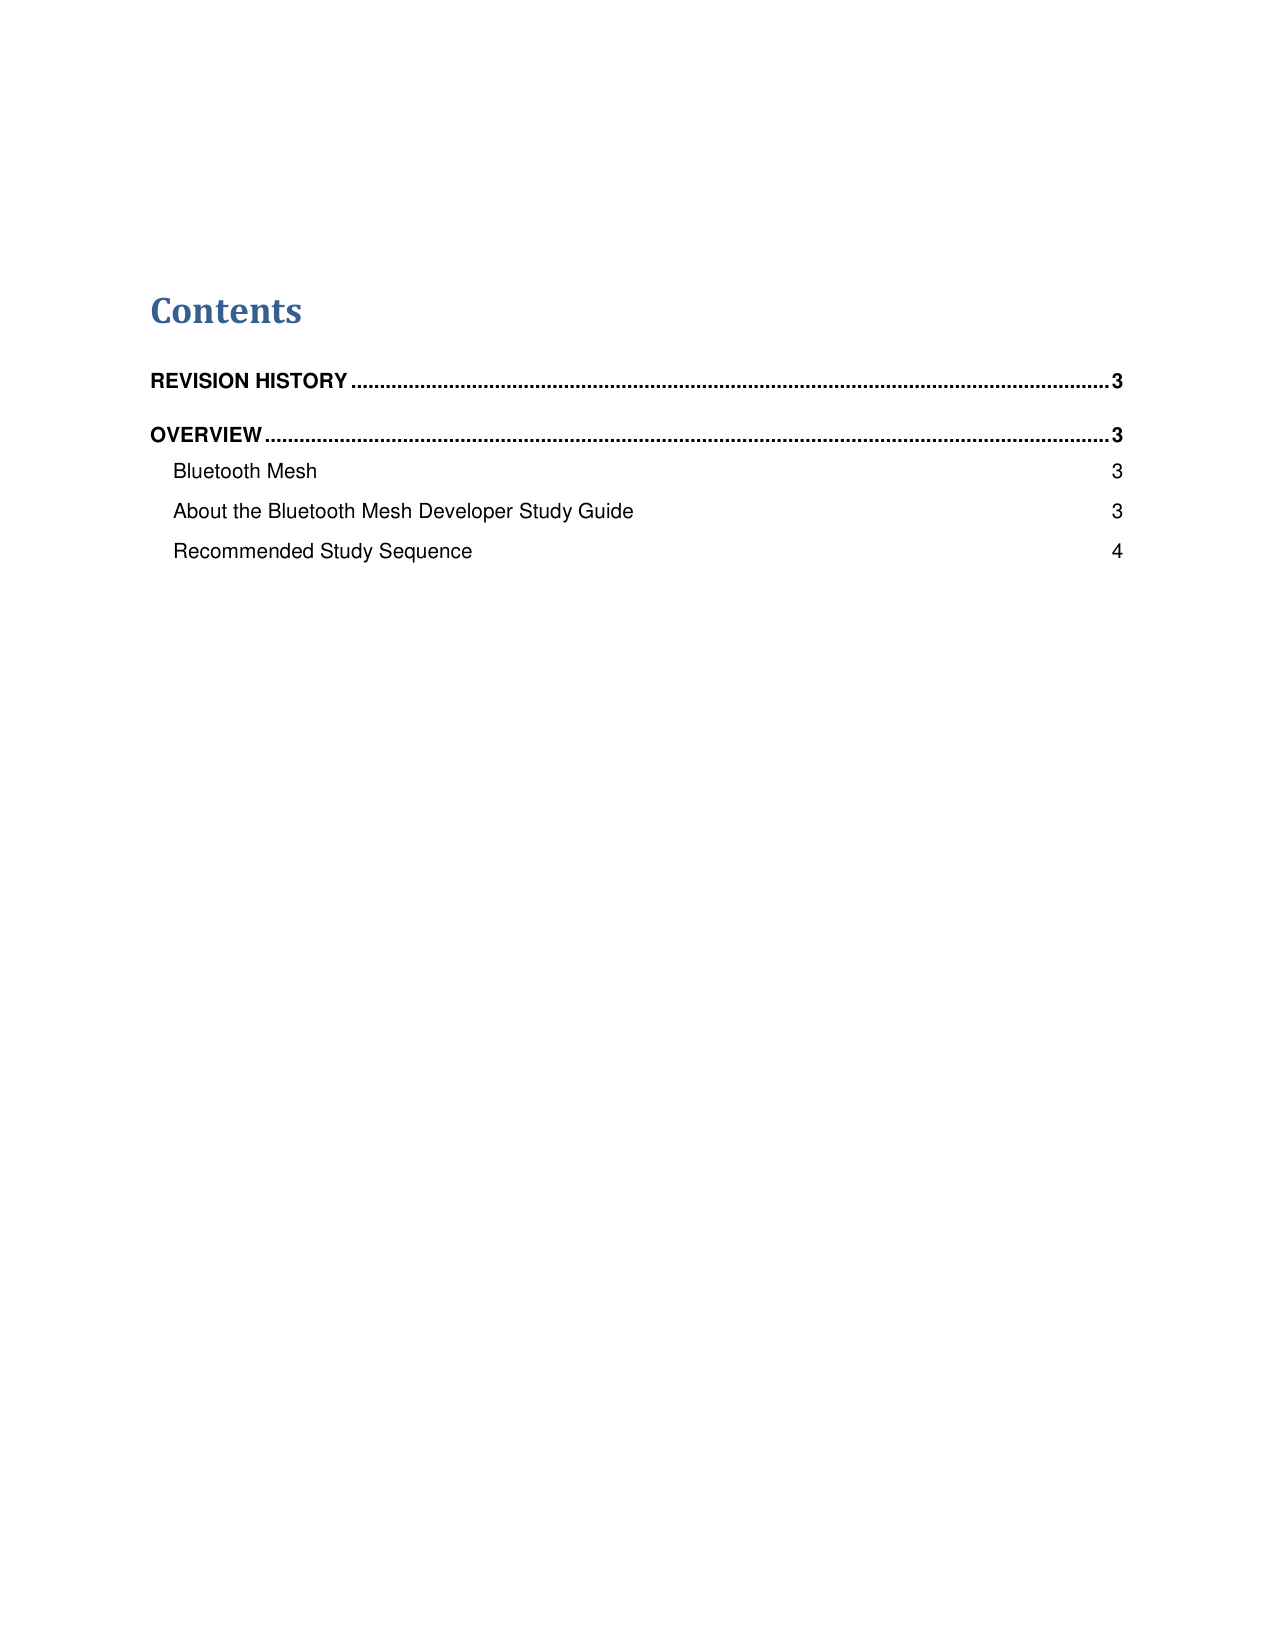 Page 2 of 4 - Bluetooth Mesh Developer Study Guide - 1. START HERE Orientation V1.0